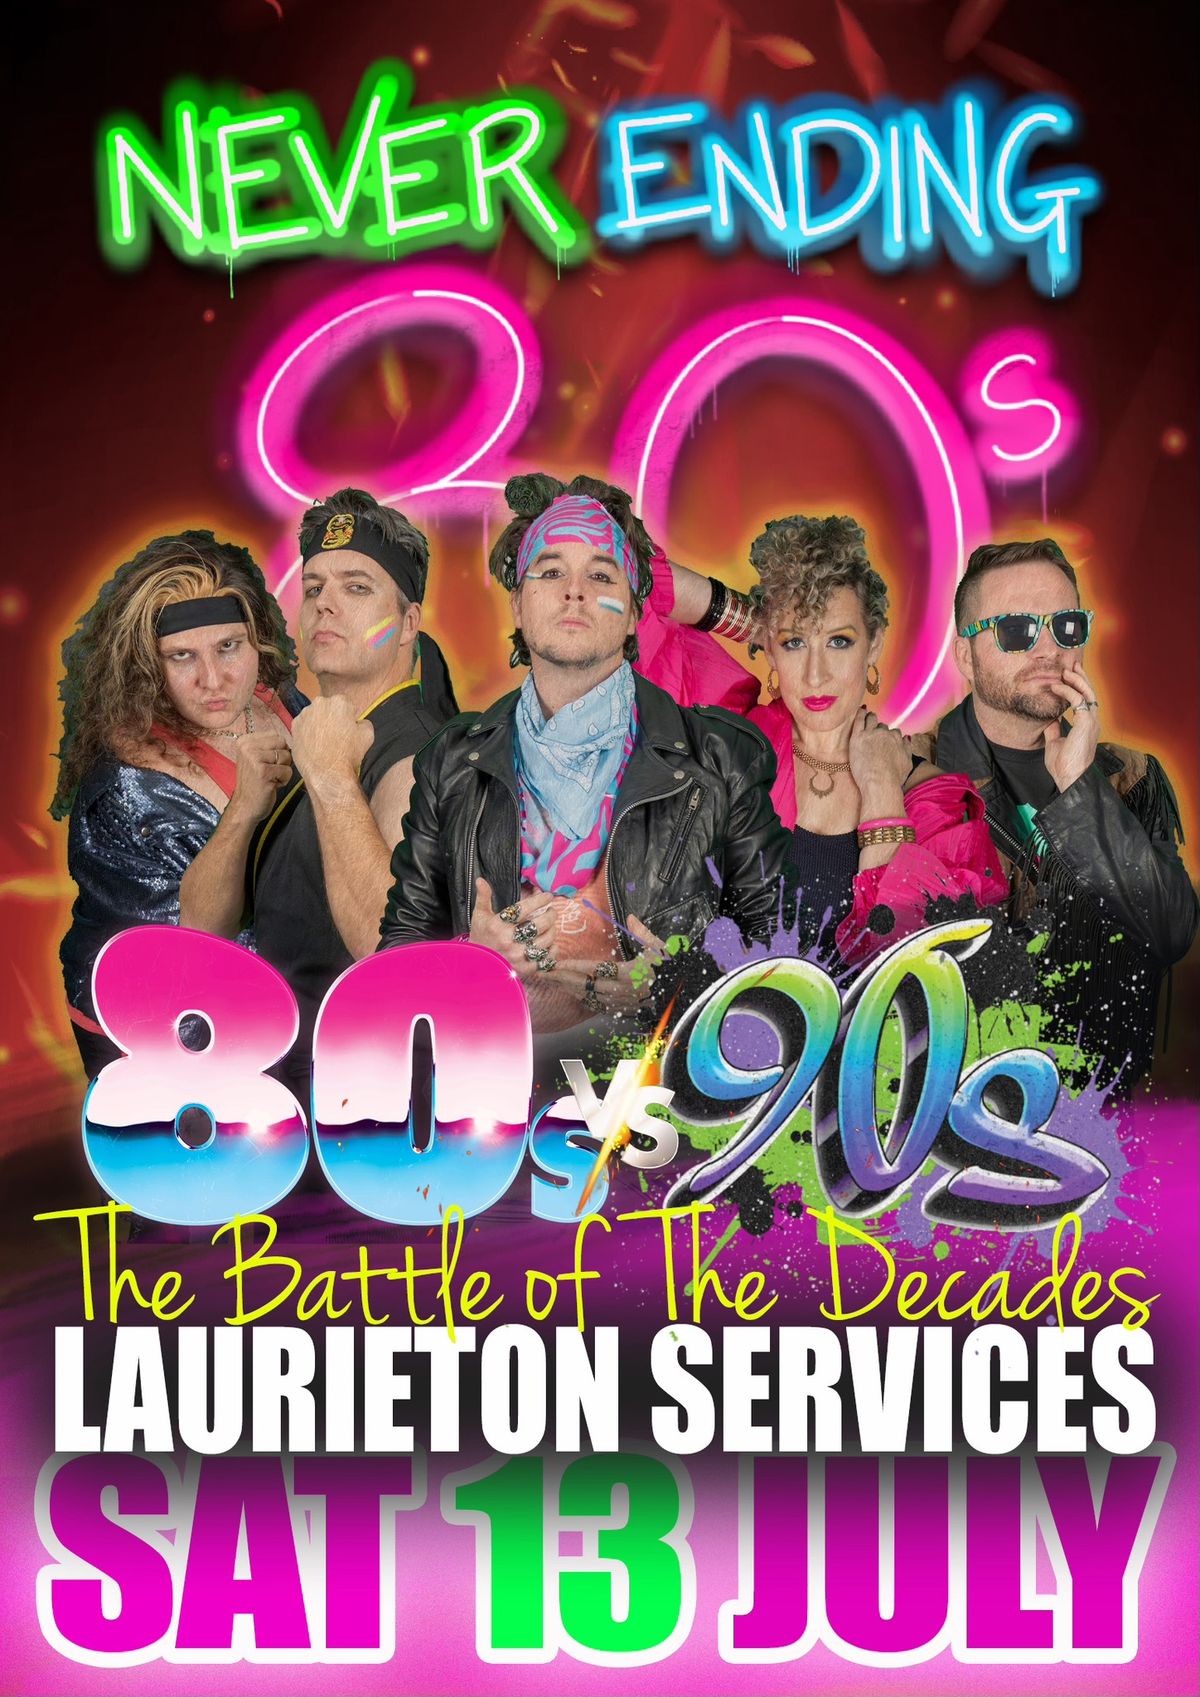 Never Ending 80s v 90s - Laurieton Services